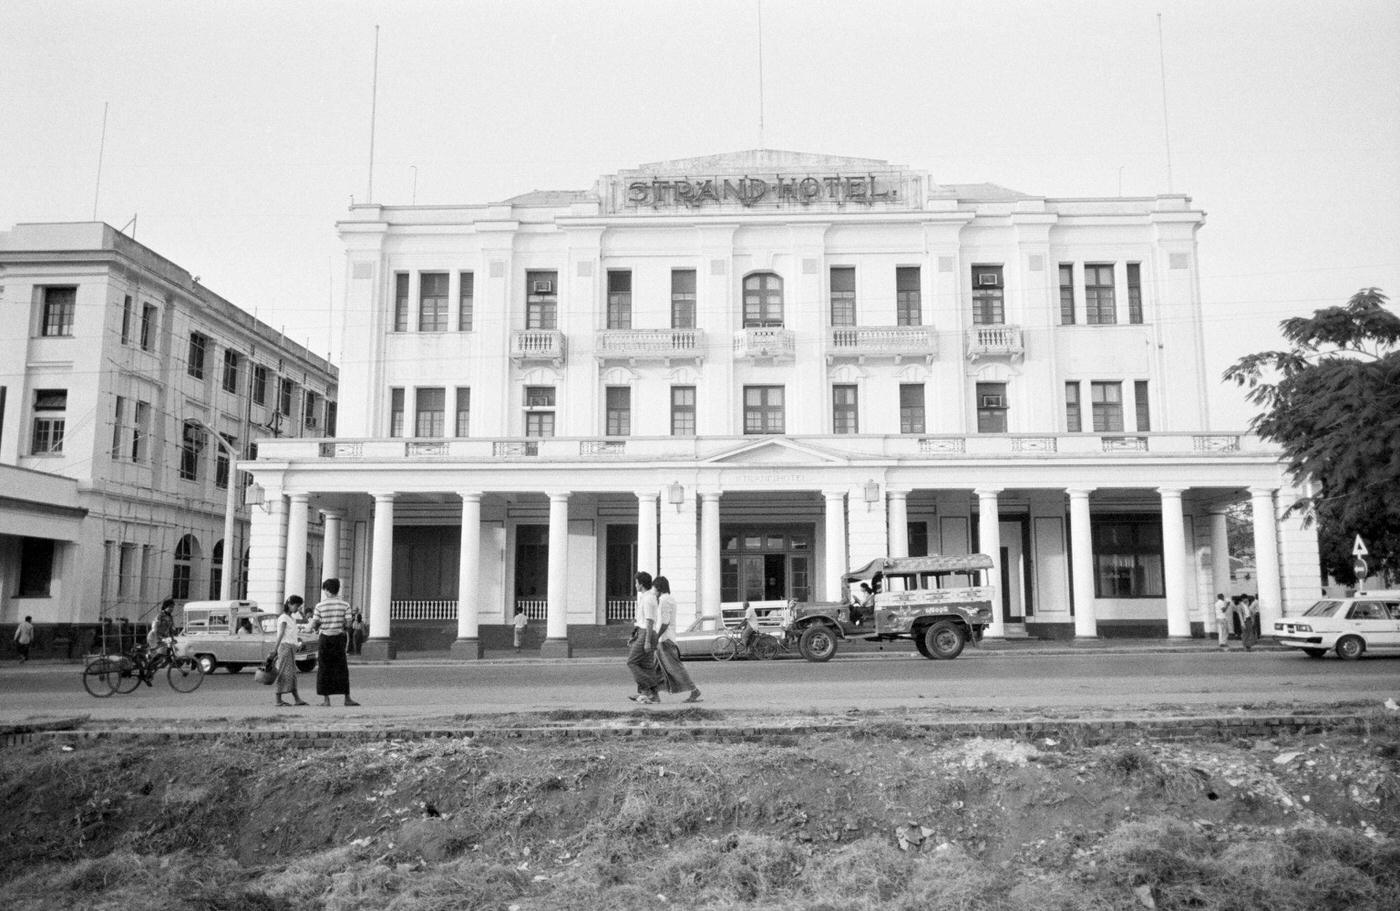 Victorian-style facade of the Strand Hotel in Rangoon, Burma, 1988.